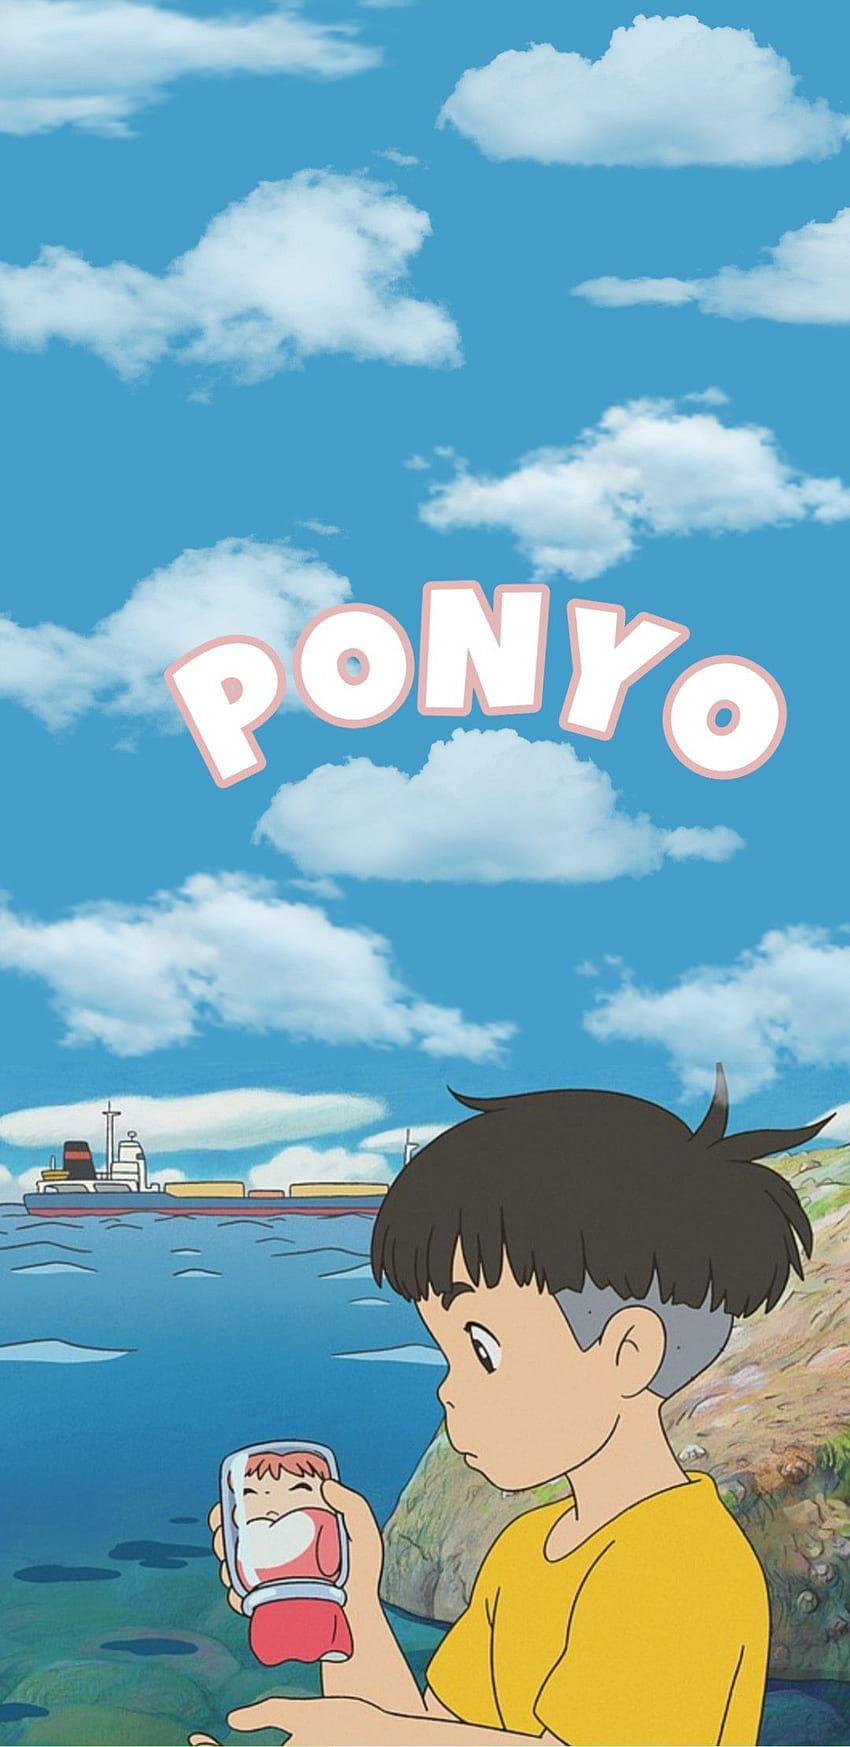 Ponyo  Anime Movie Review  YouTube